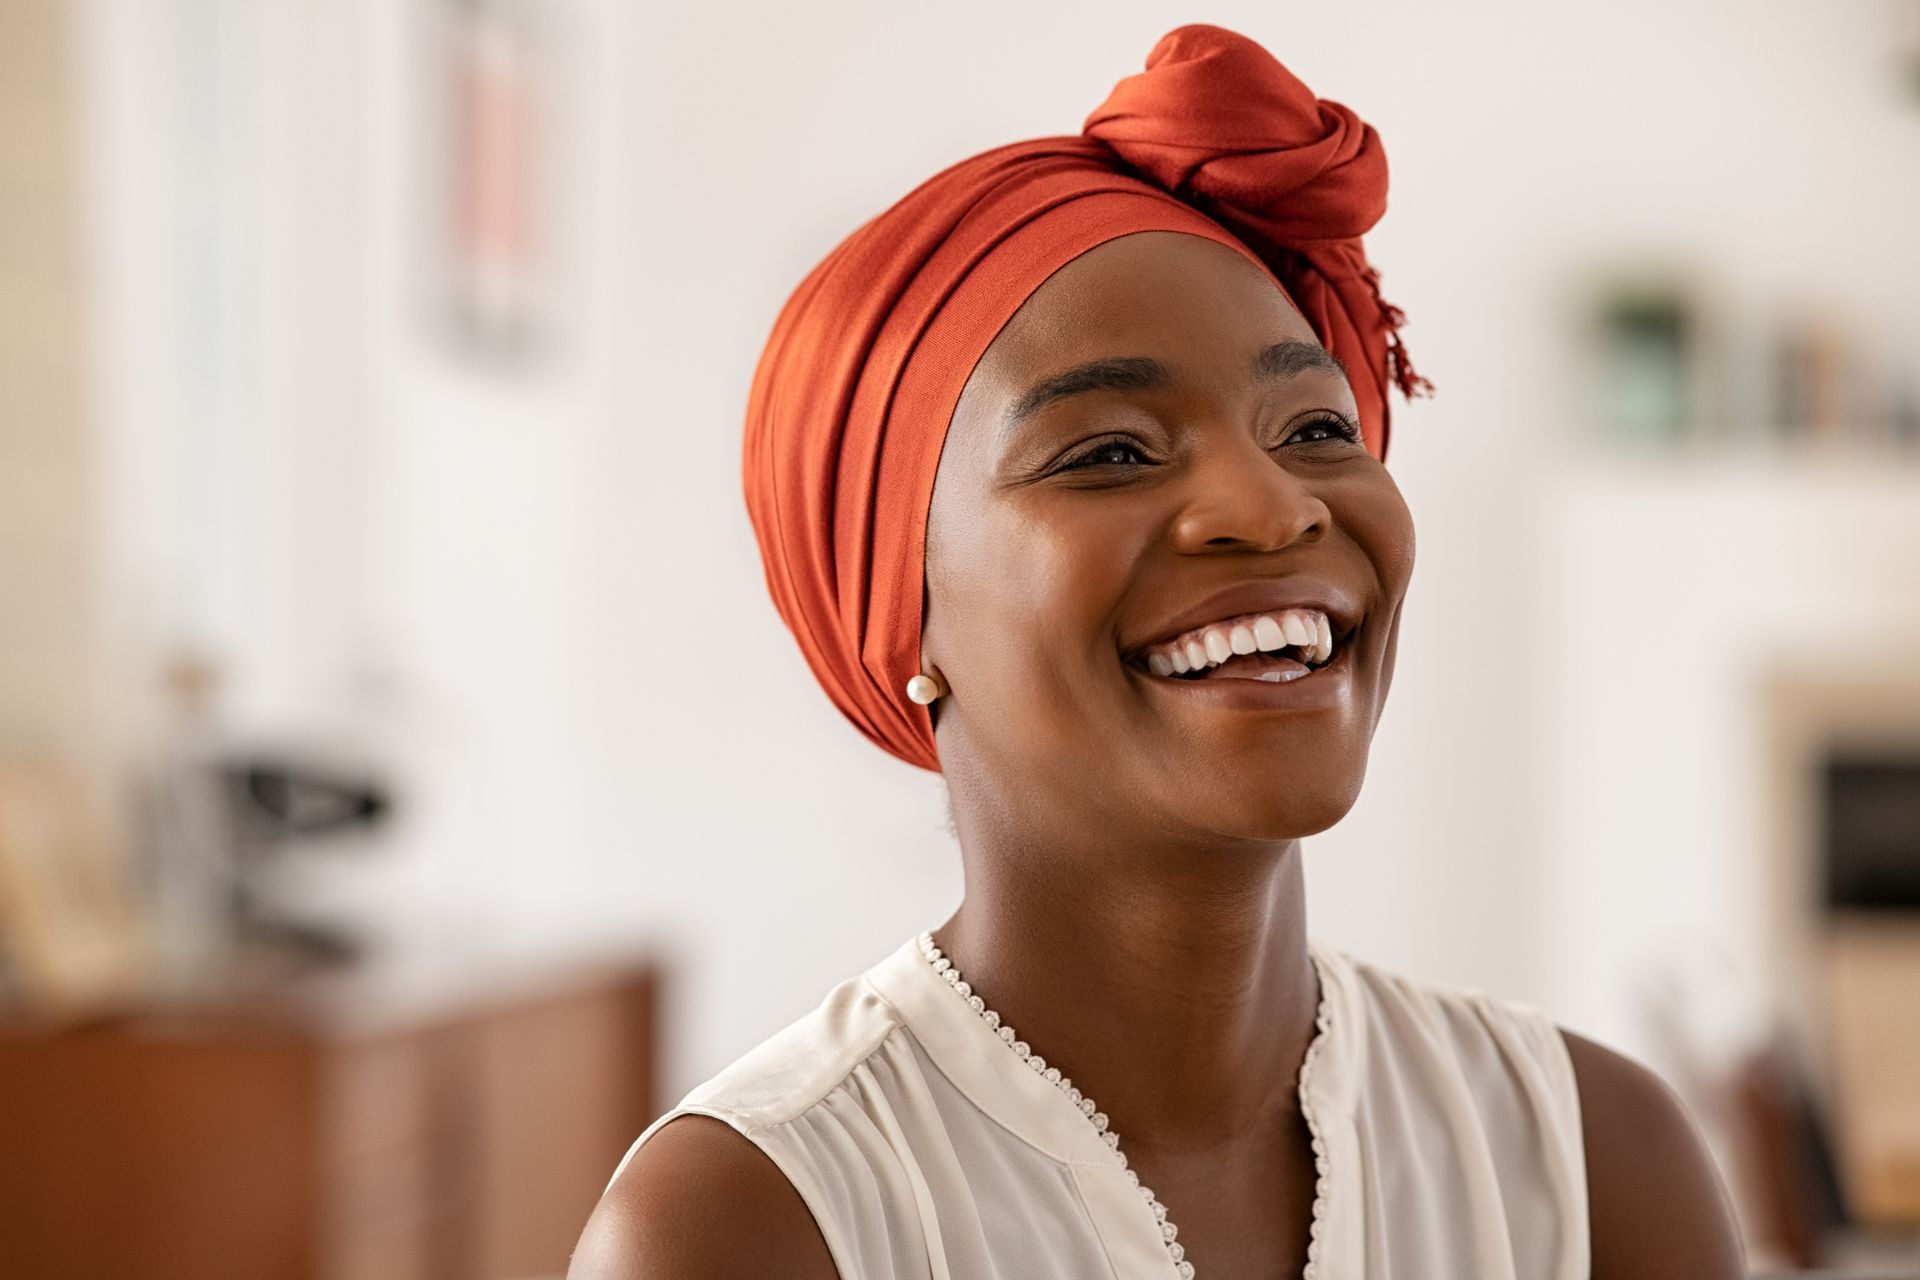 A woman wearing an orange head scarf is smiling.